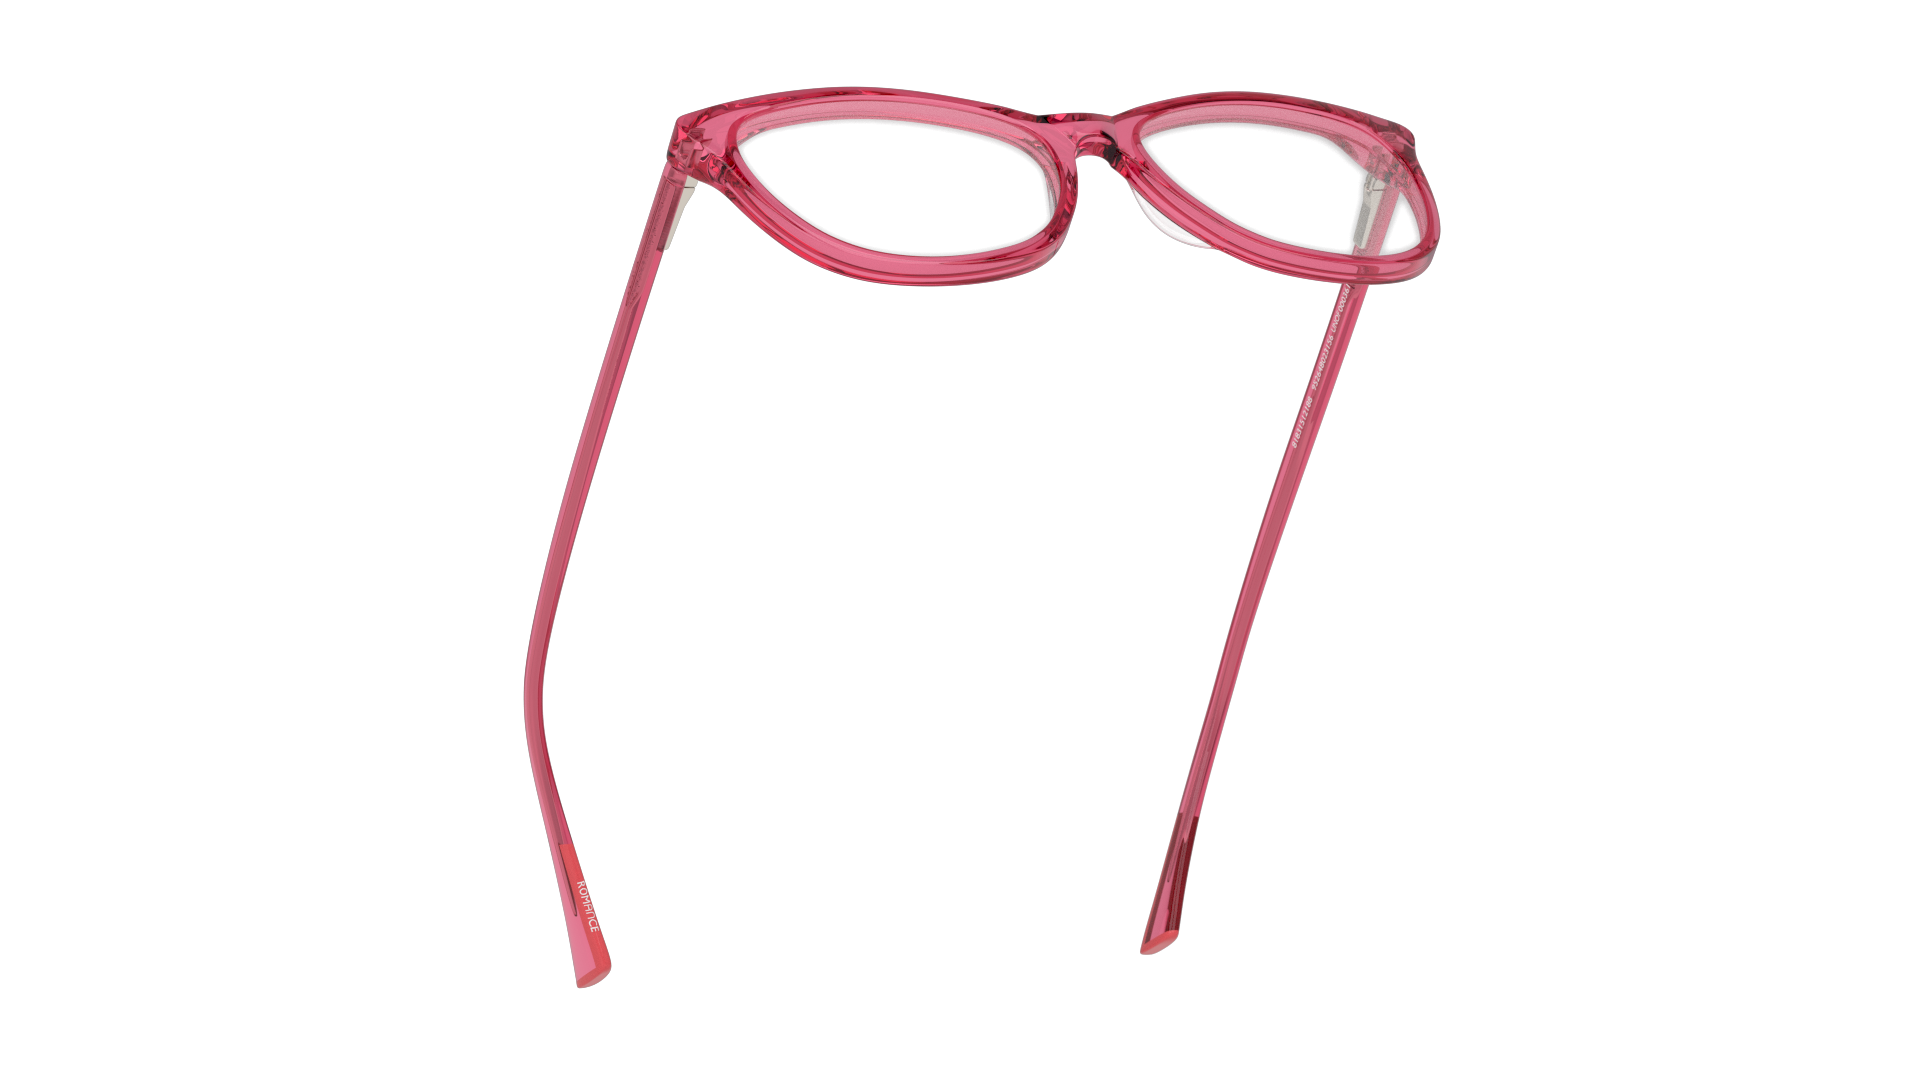 Bottom_Up Unofficial UNOF0003 Glasses Transparent / Transparent, Pink